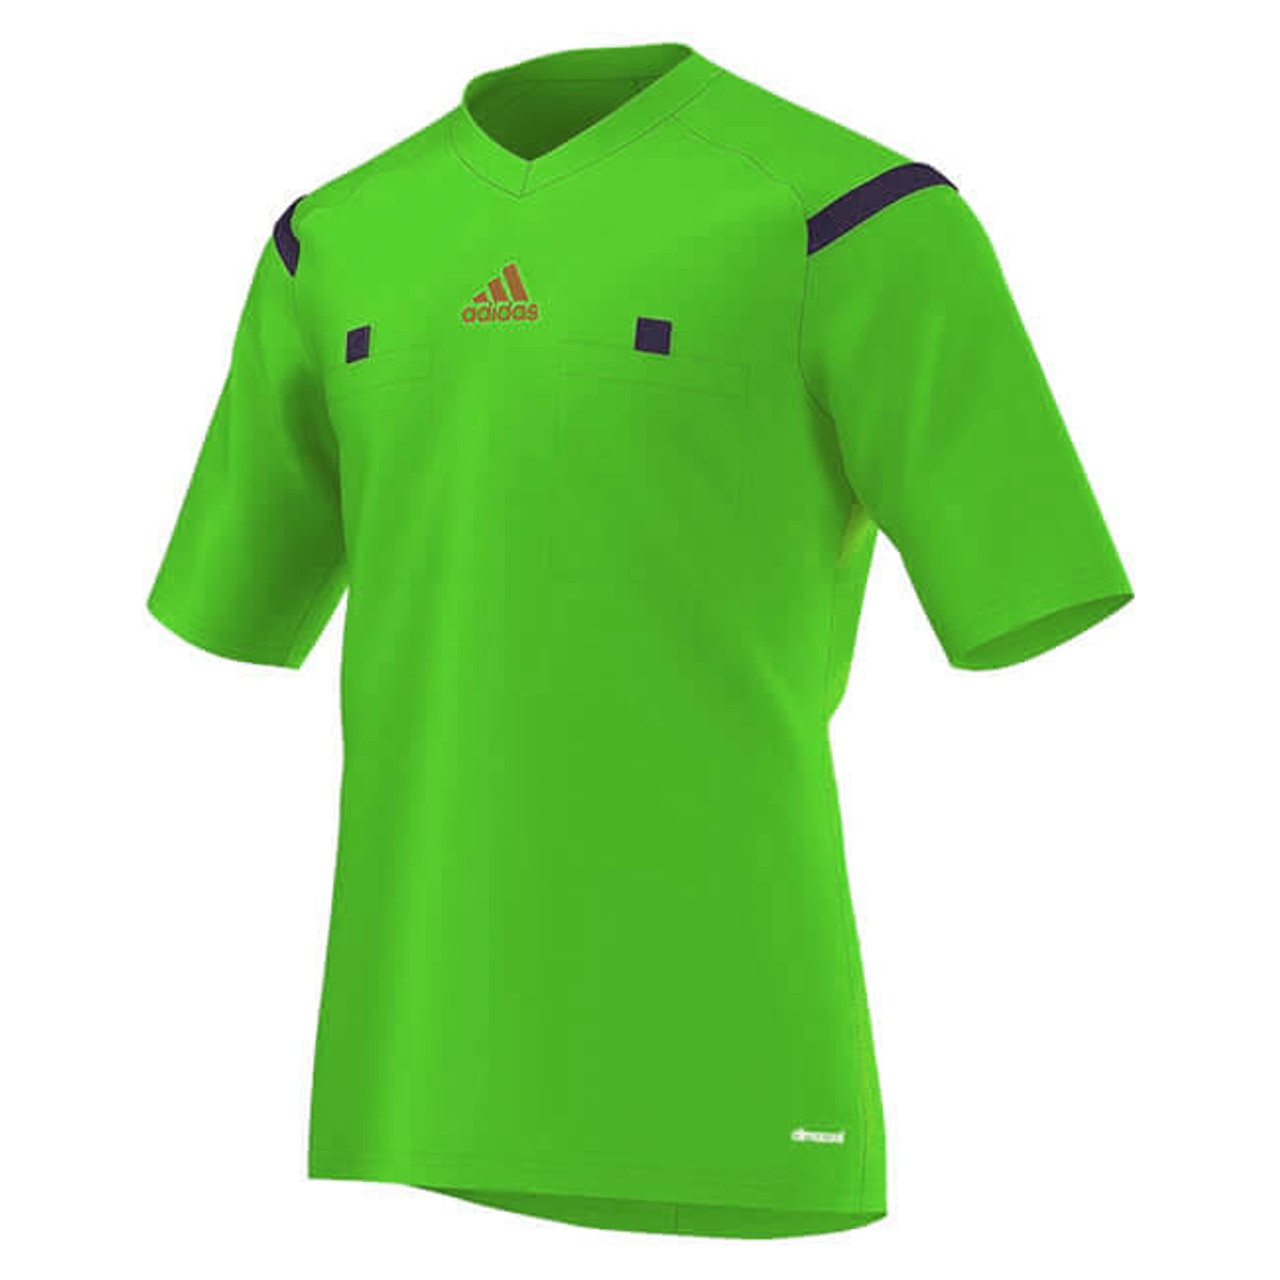 2014 Adidas Referee Jersey Short Sleeve (Green)